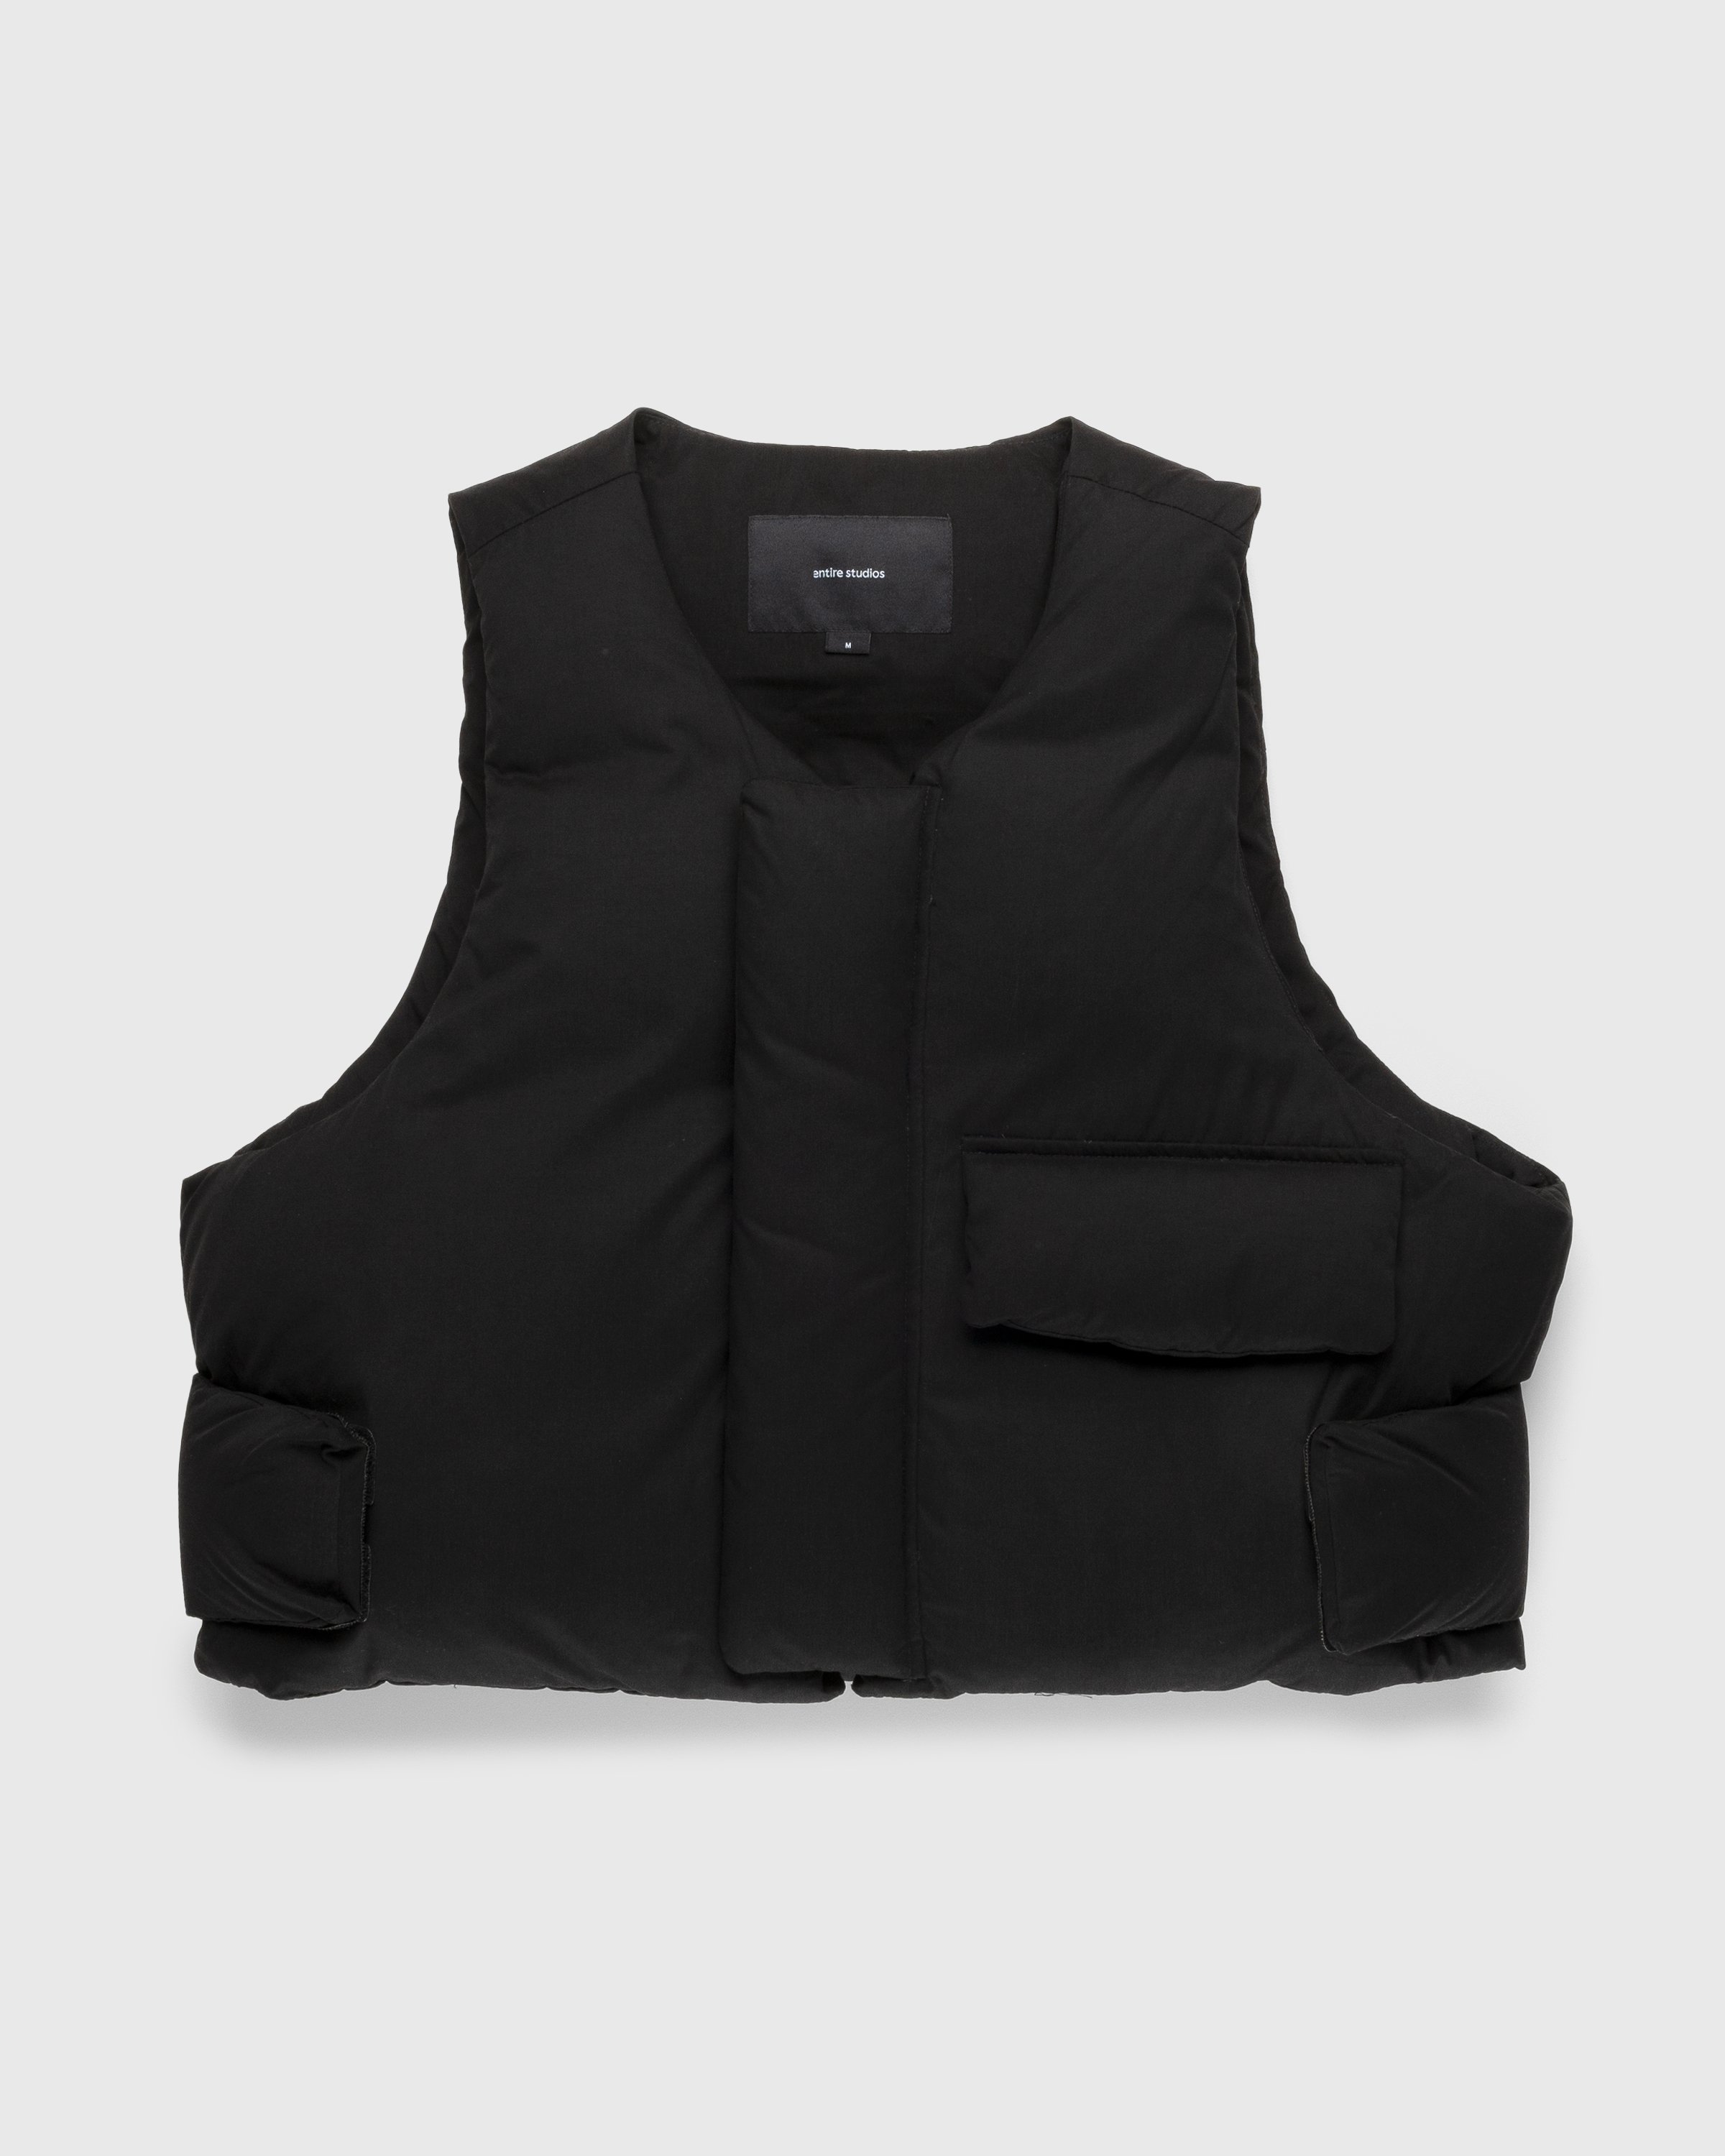 Entire Studios - Pillow Vest Soot - Clothing - Black - Image 1